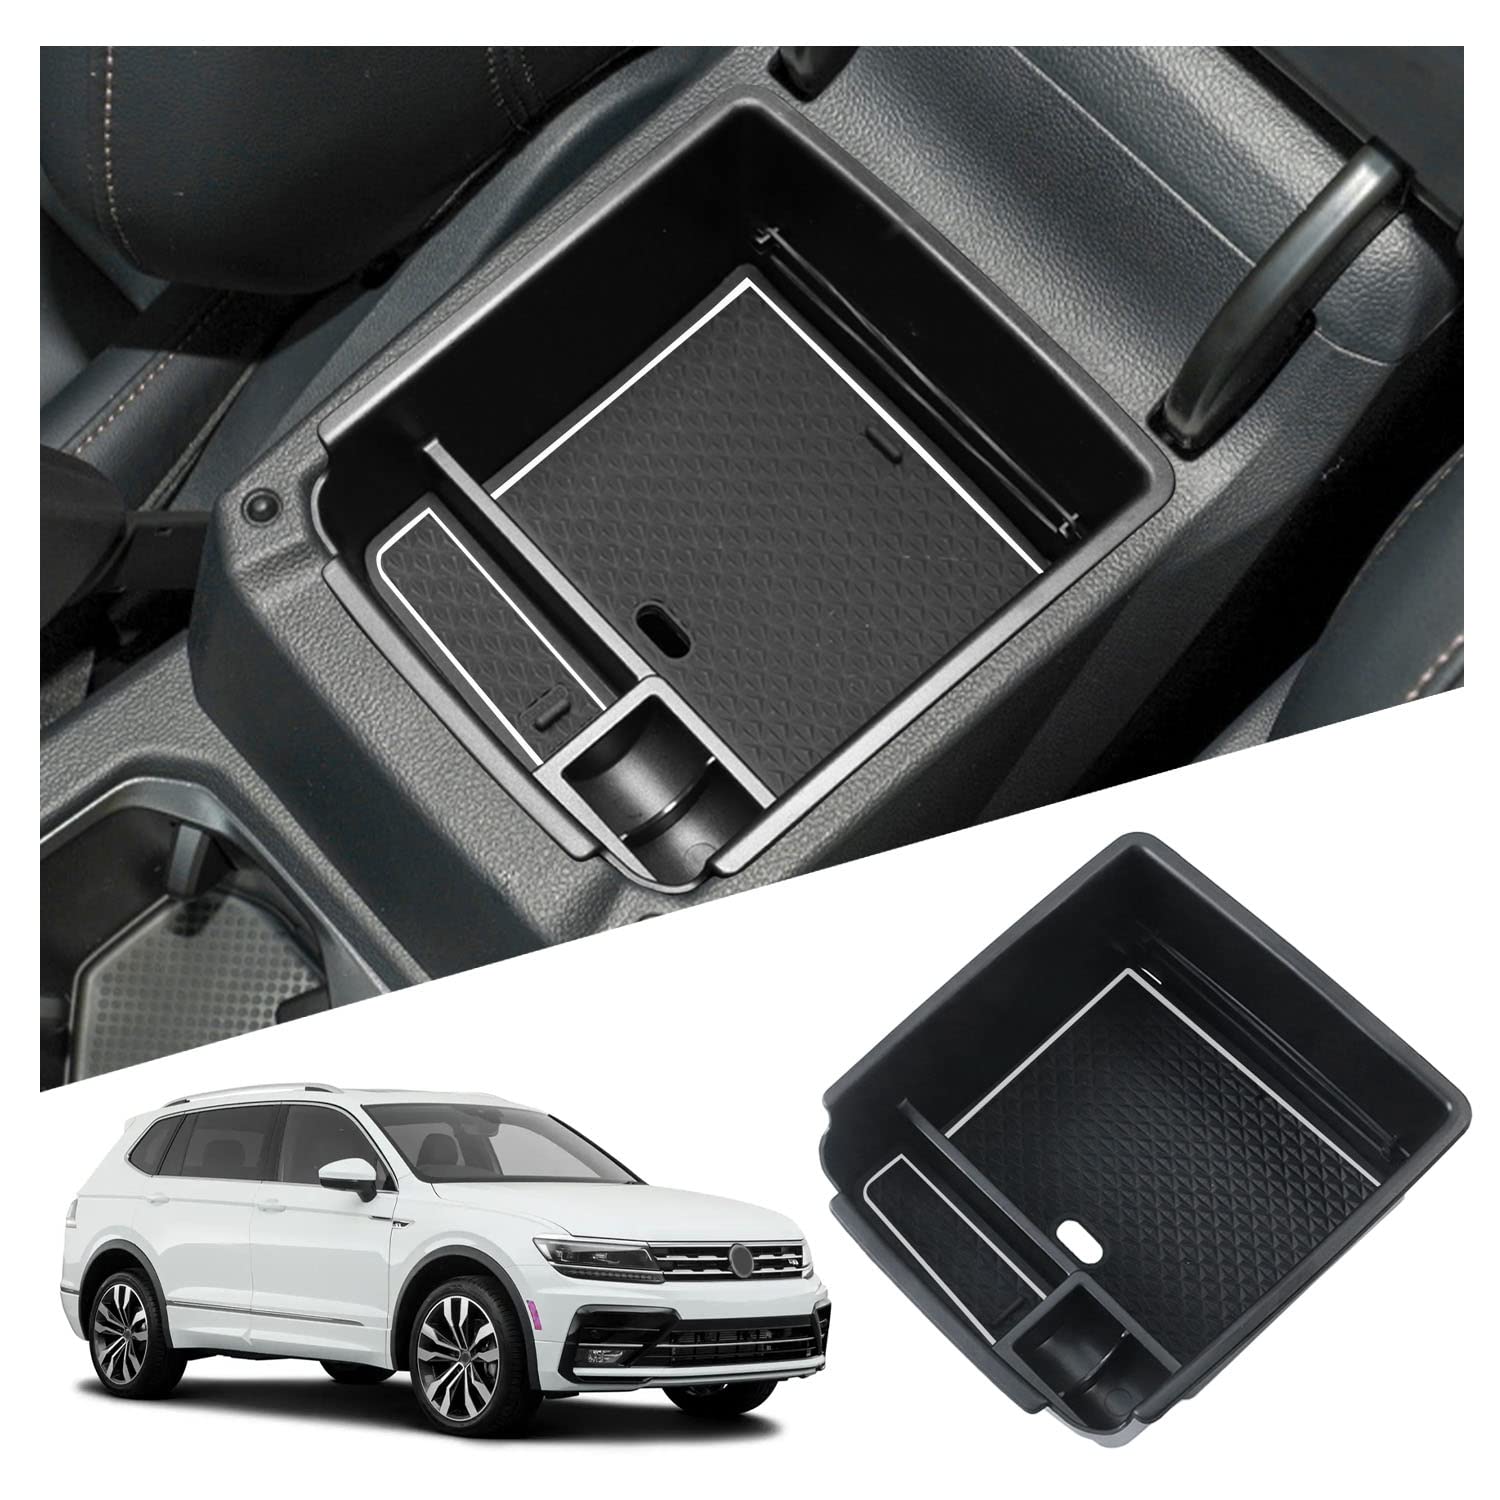 VW Tiguan 2 MK2 Centre Console Organizer Tray 2017+ - LFOTPP Car Accessories